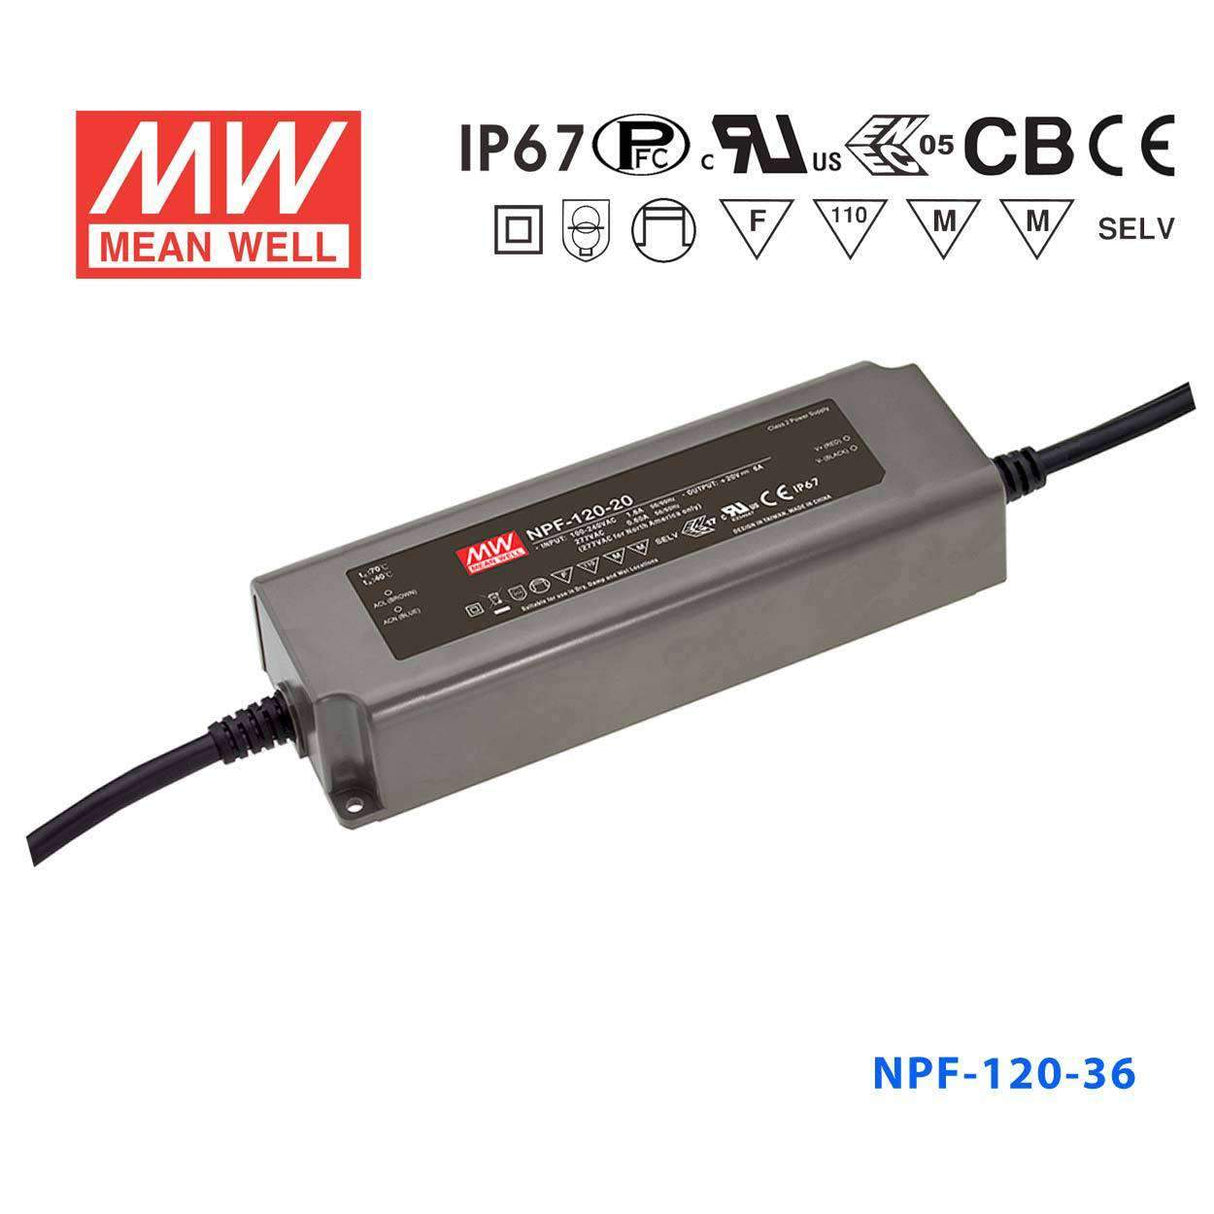 Mean Well NPF-120-36 Power Supply 120W 36V